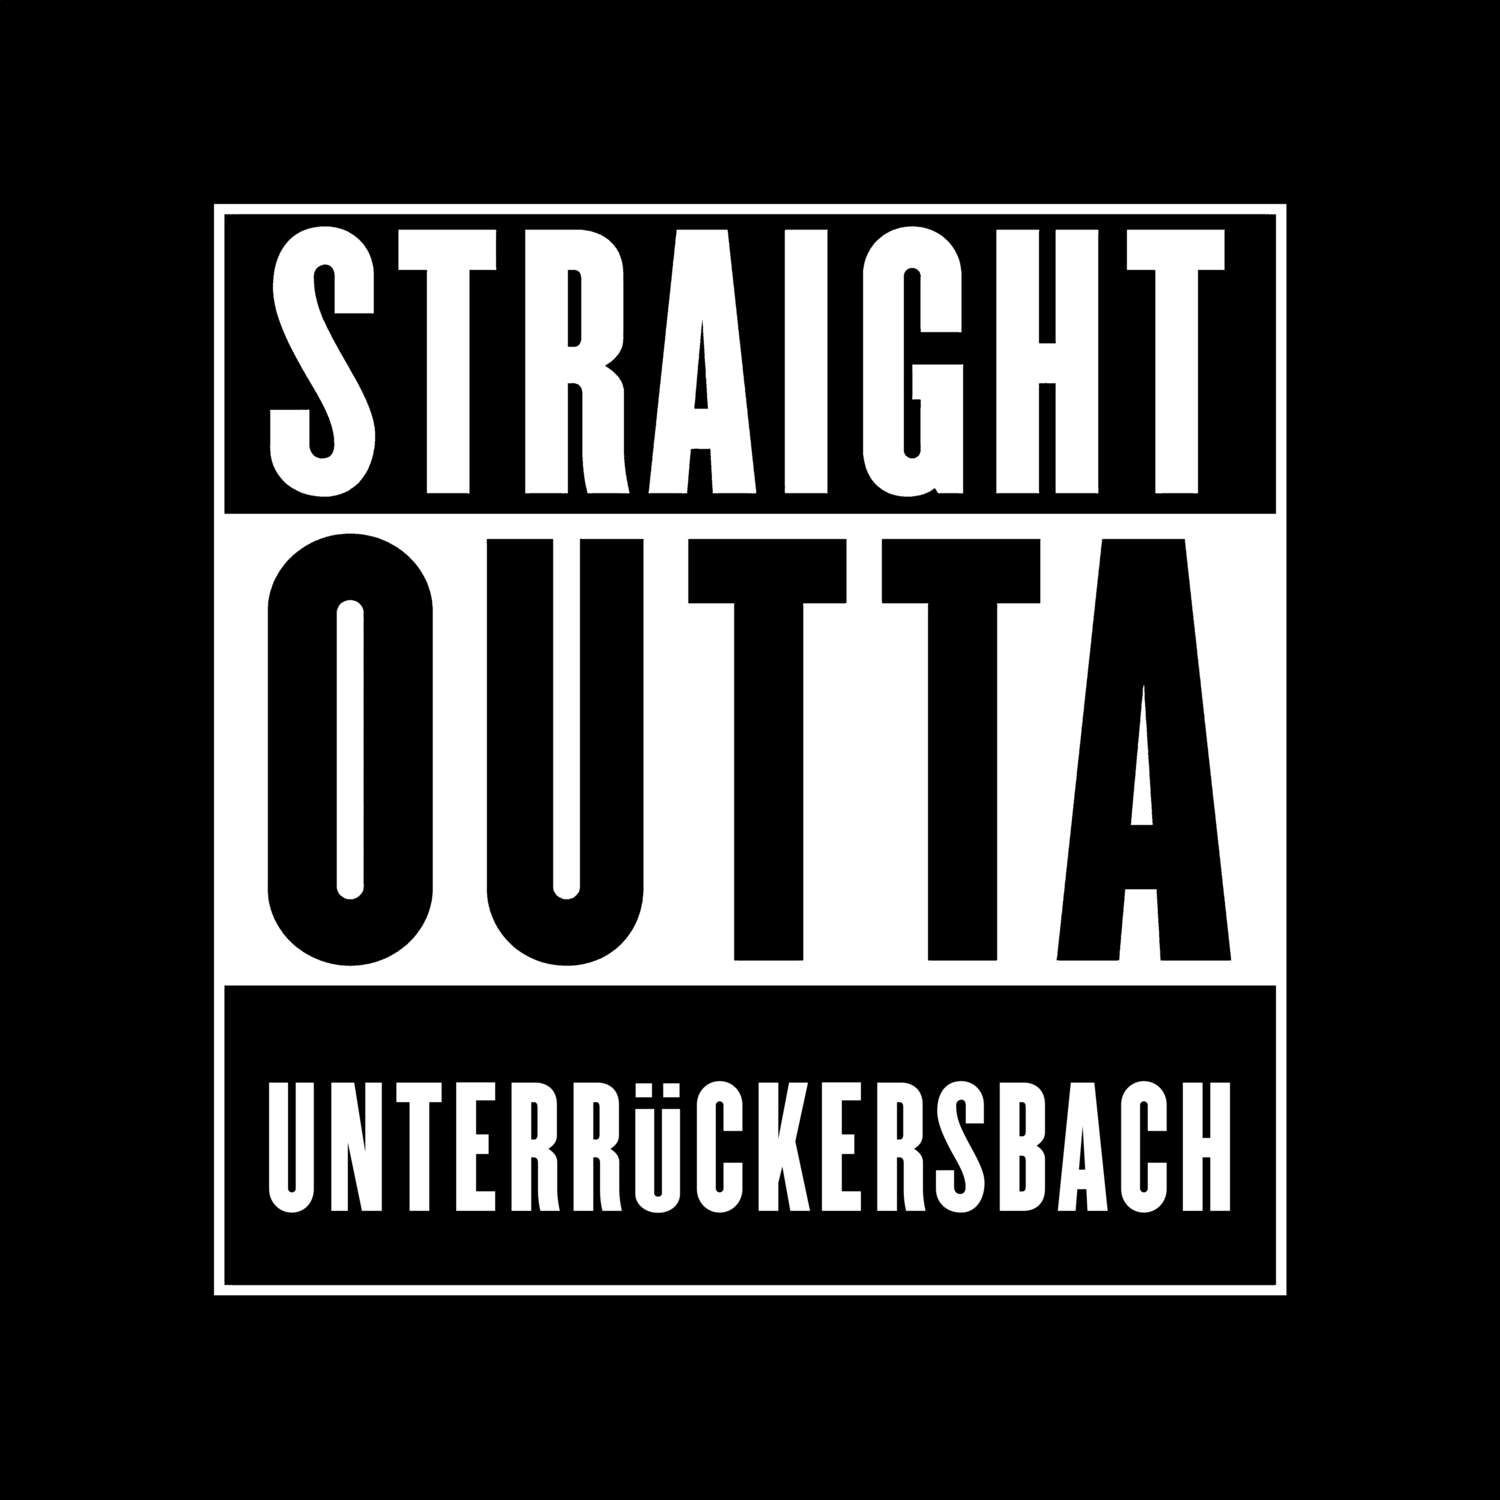 Unterrückersbach T-Shirt »Straight Outta«